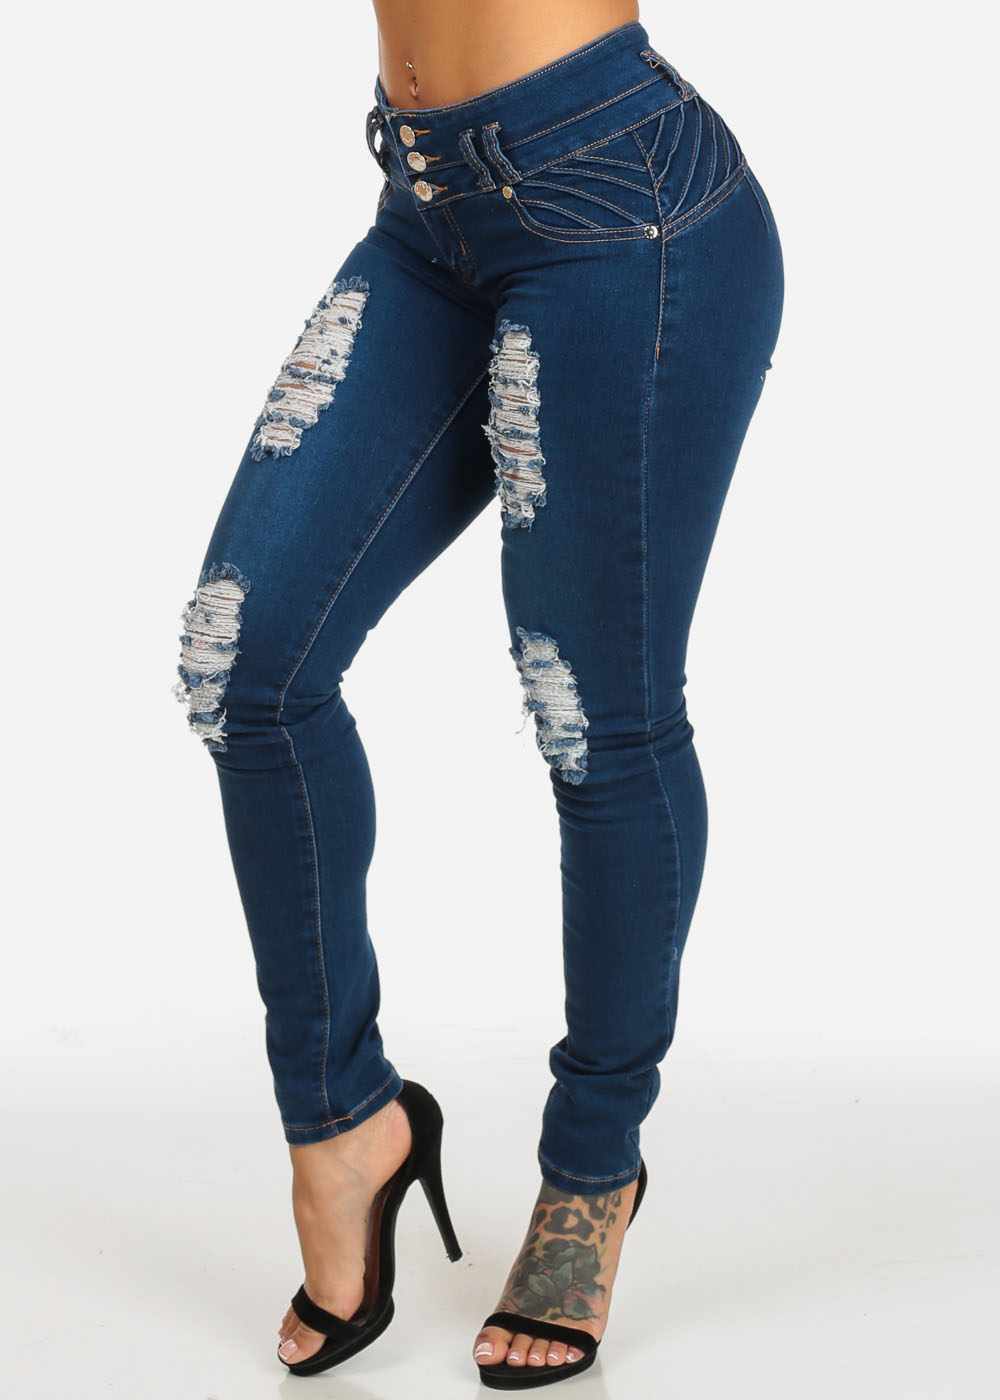 ripped jeans for women walmart